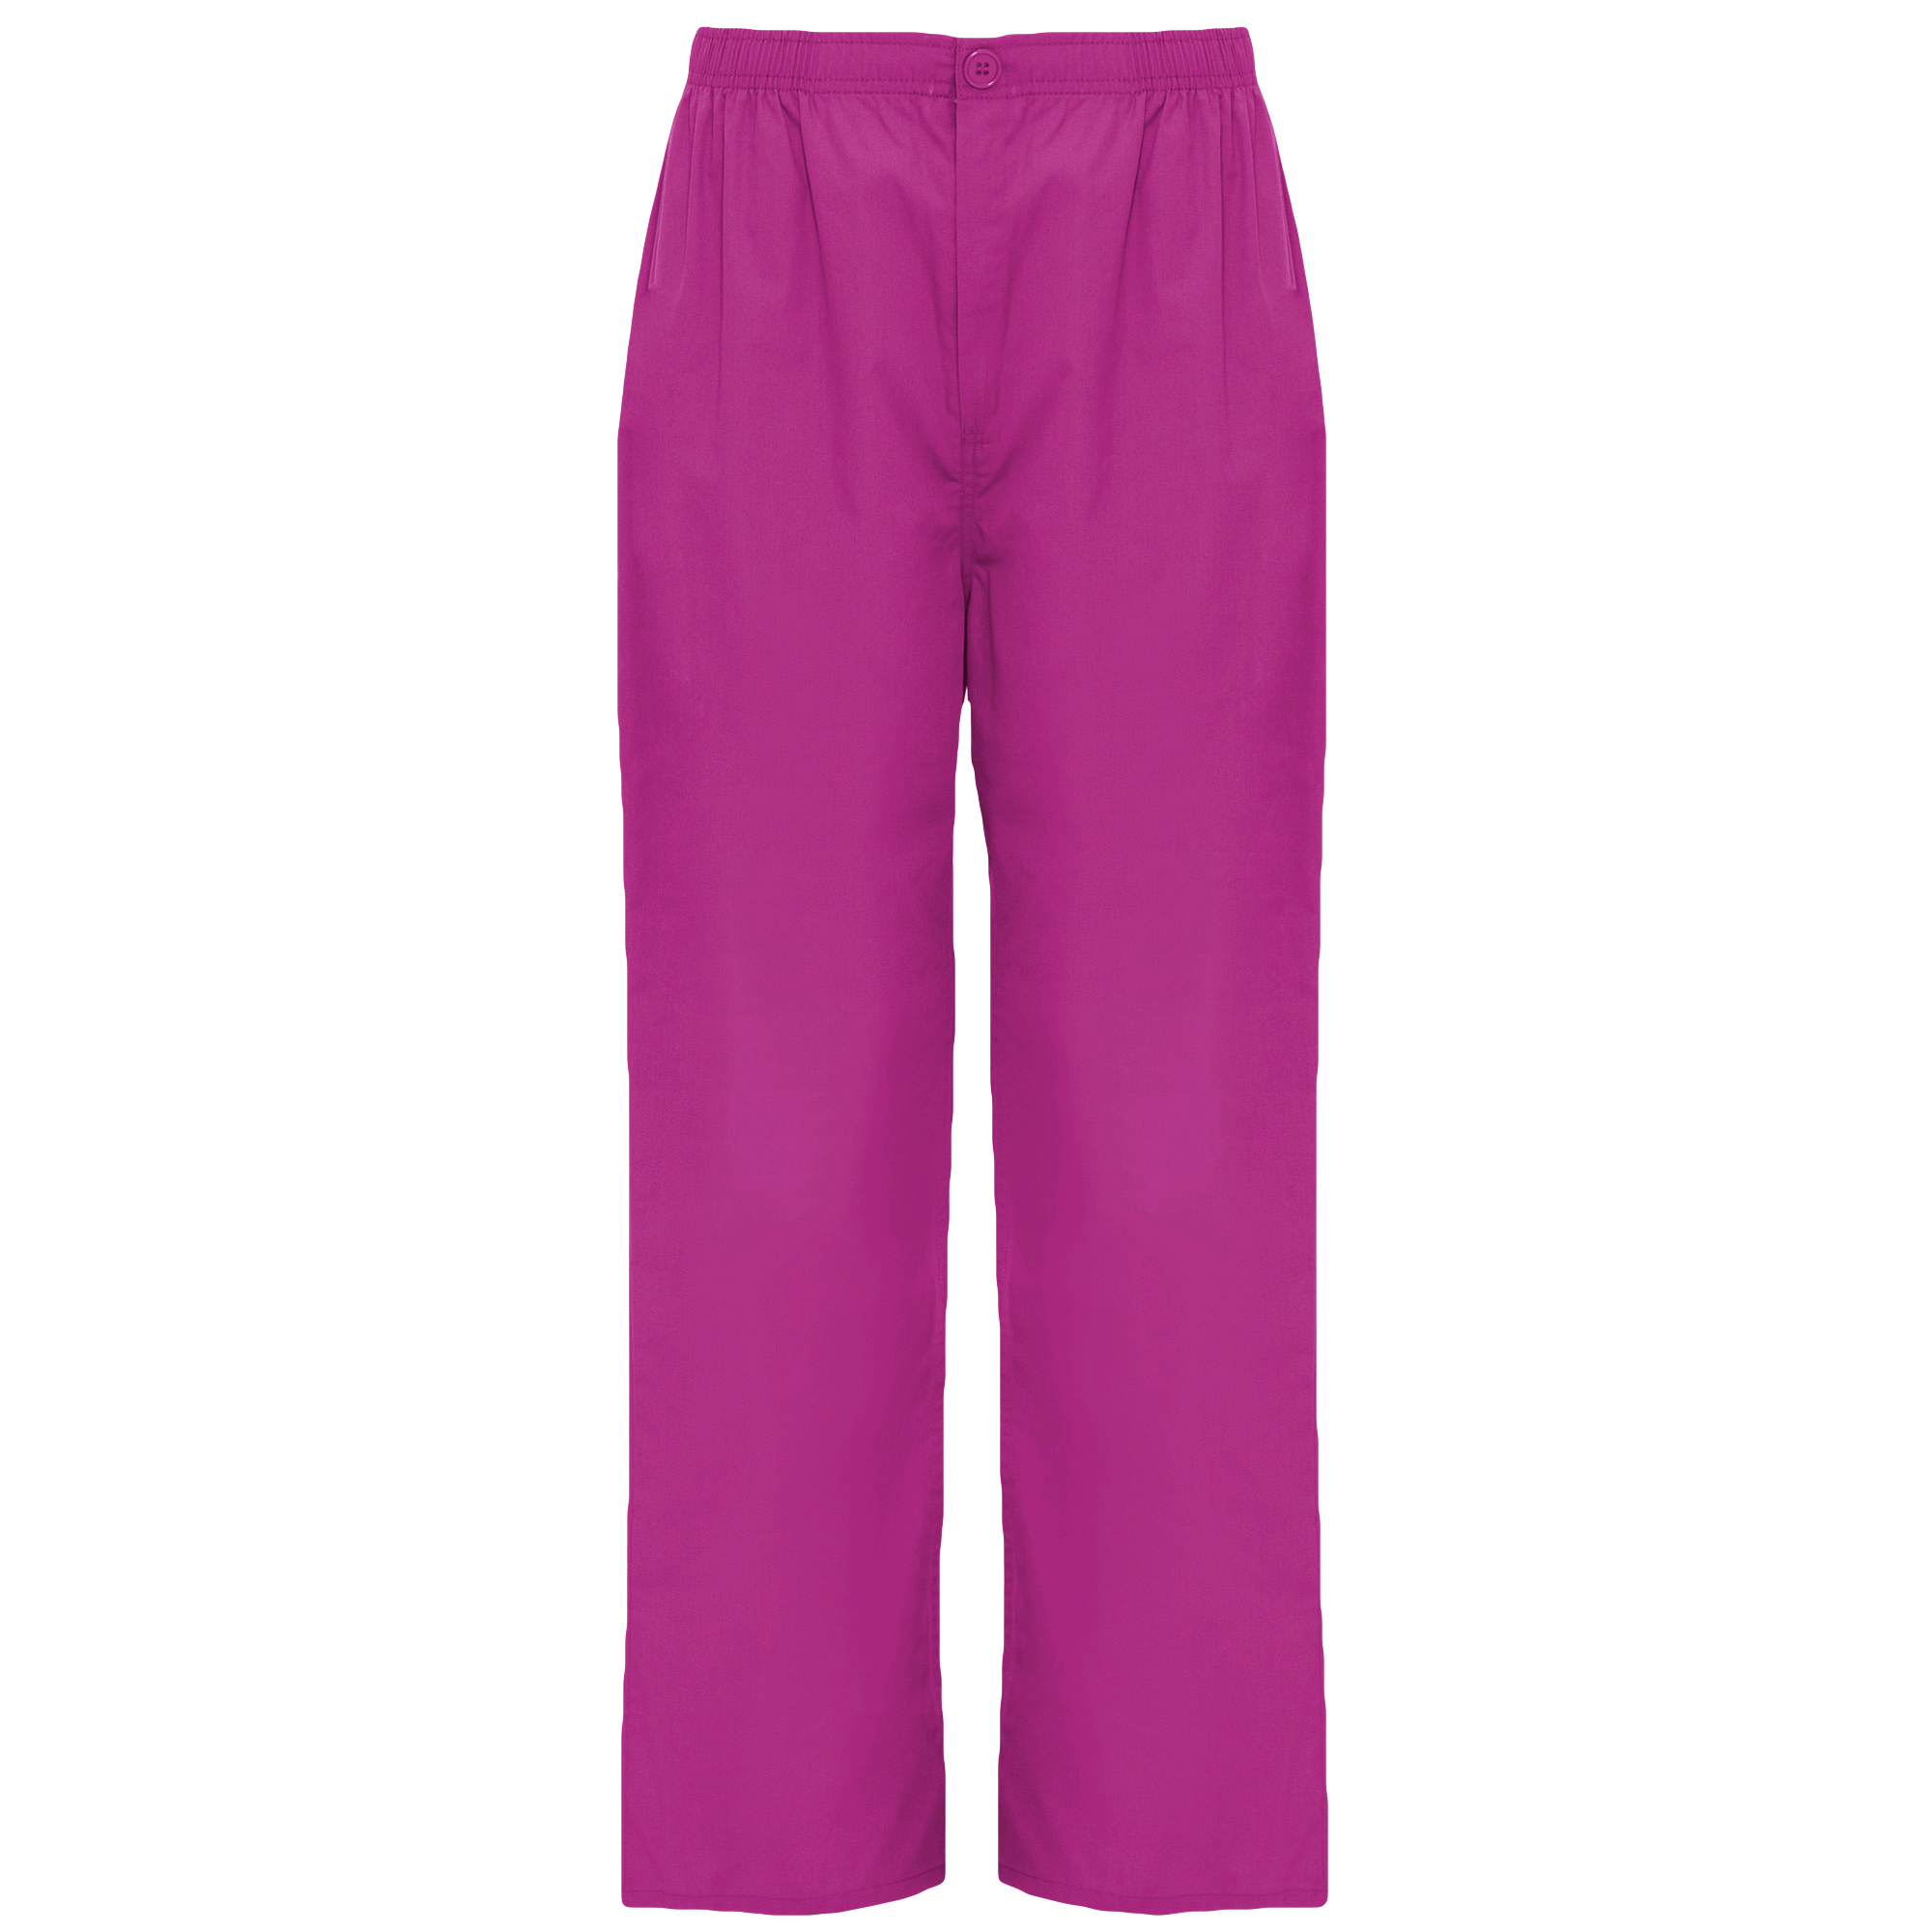 r9097-roly-vademecum-pantaloni-unisex-violeta.jpg